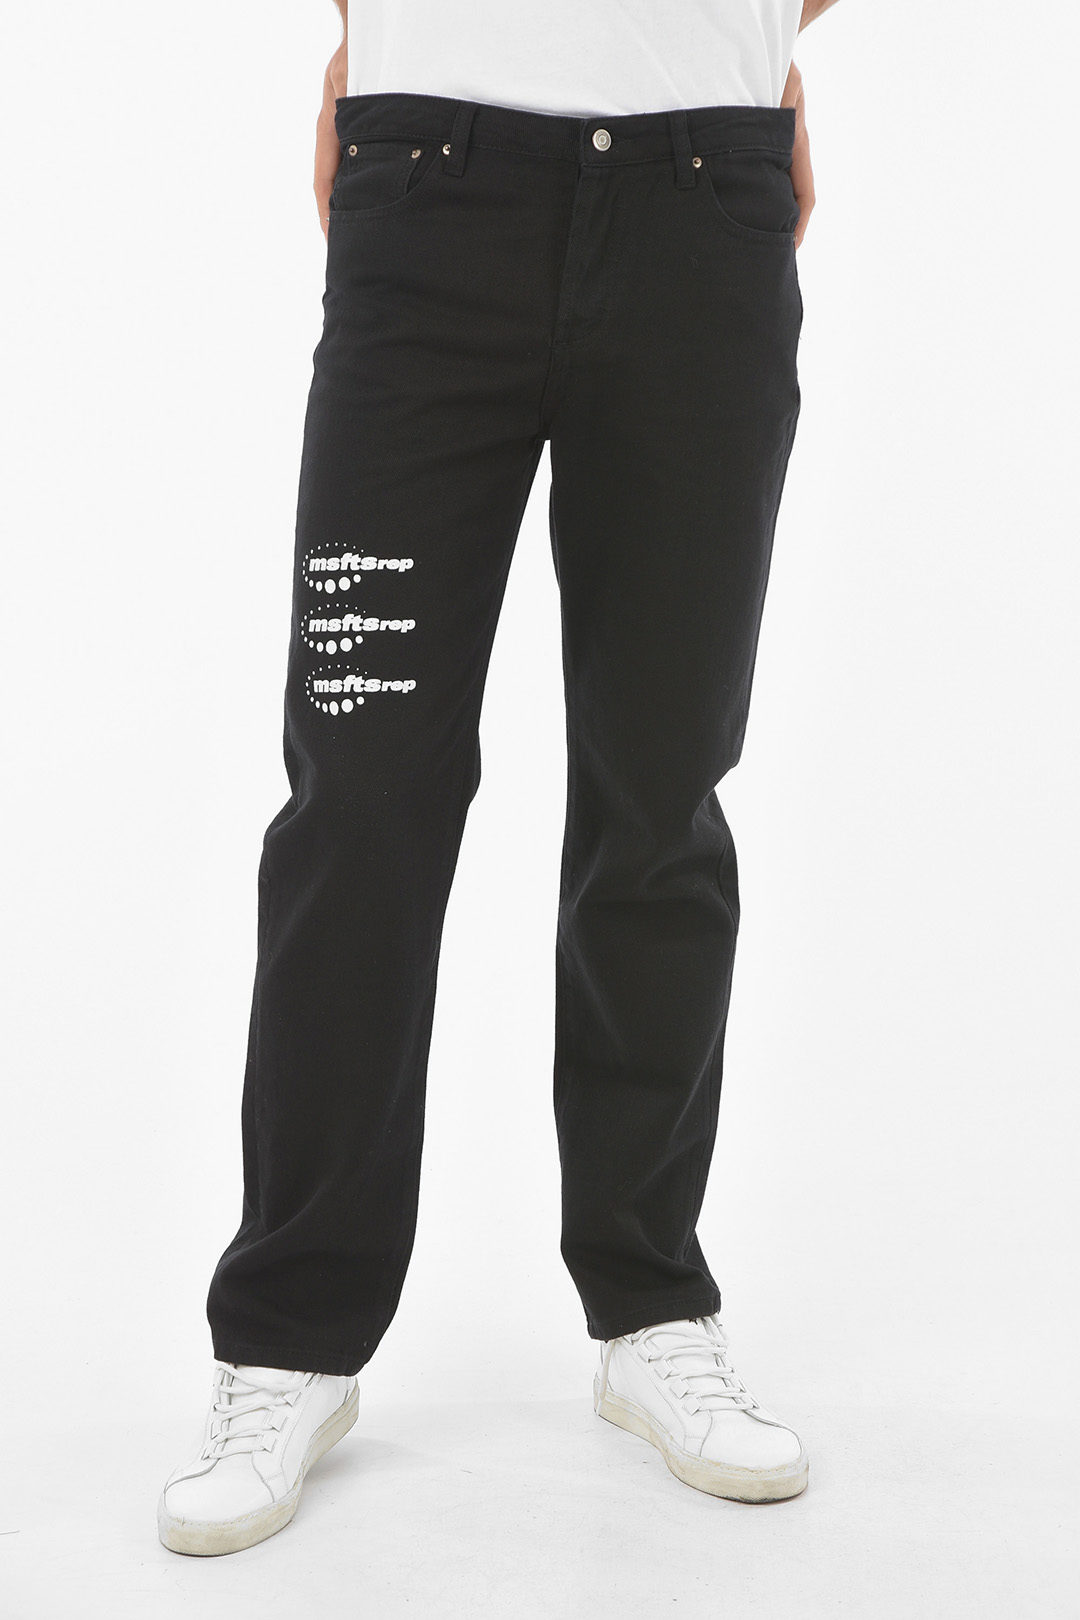 pauze Terminologie berouw hebben MSFTSrep 20cm logo printed regular waist jeans men - Glamood Outlet